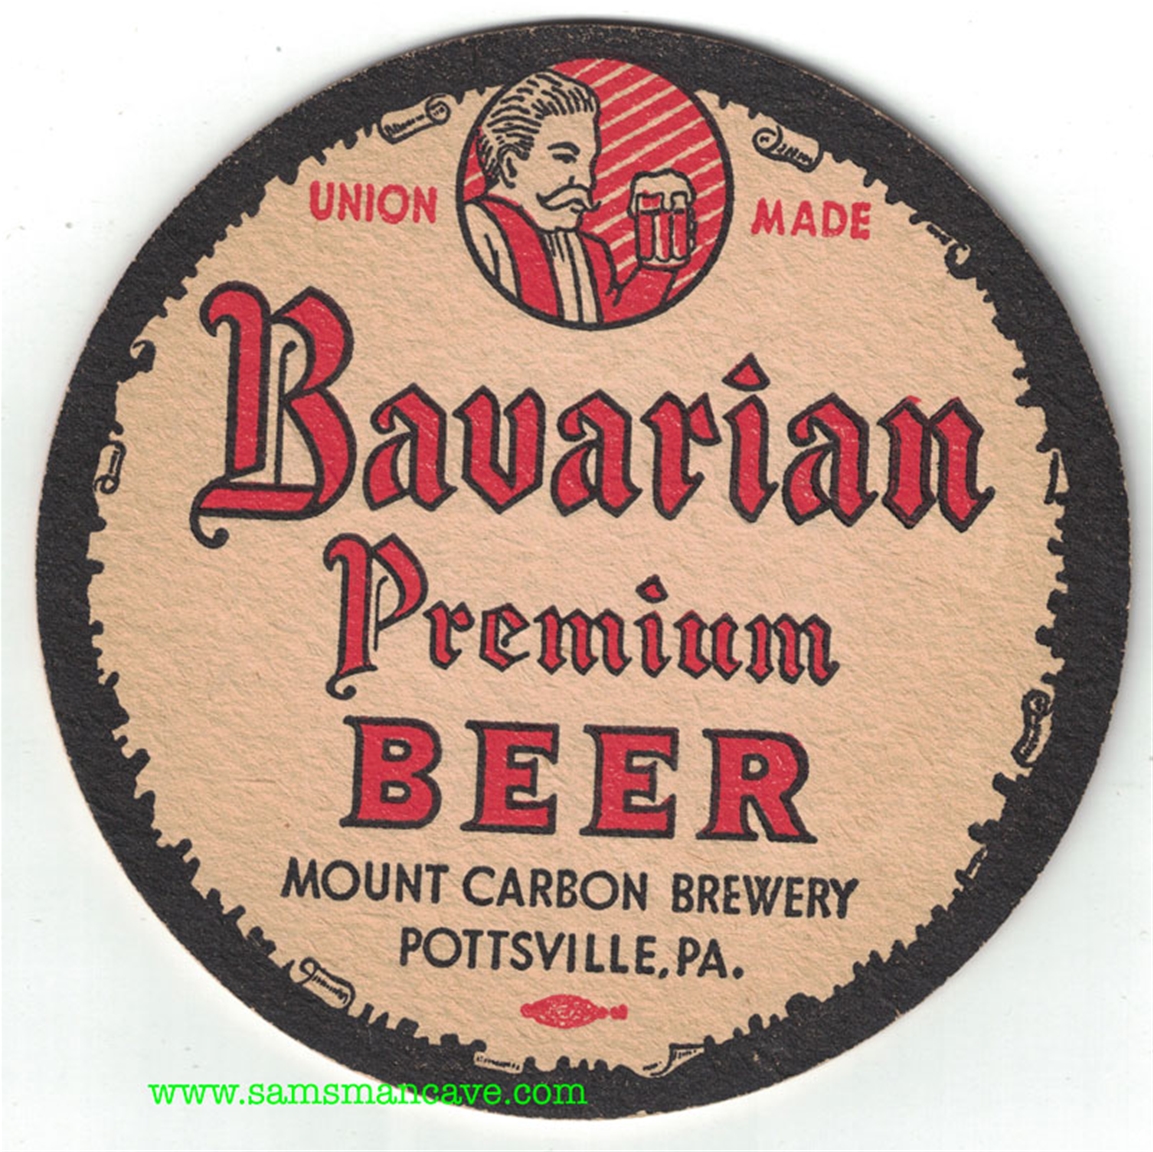 Bavarian Premium Beer Coaster